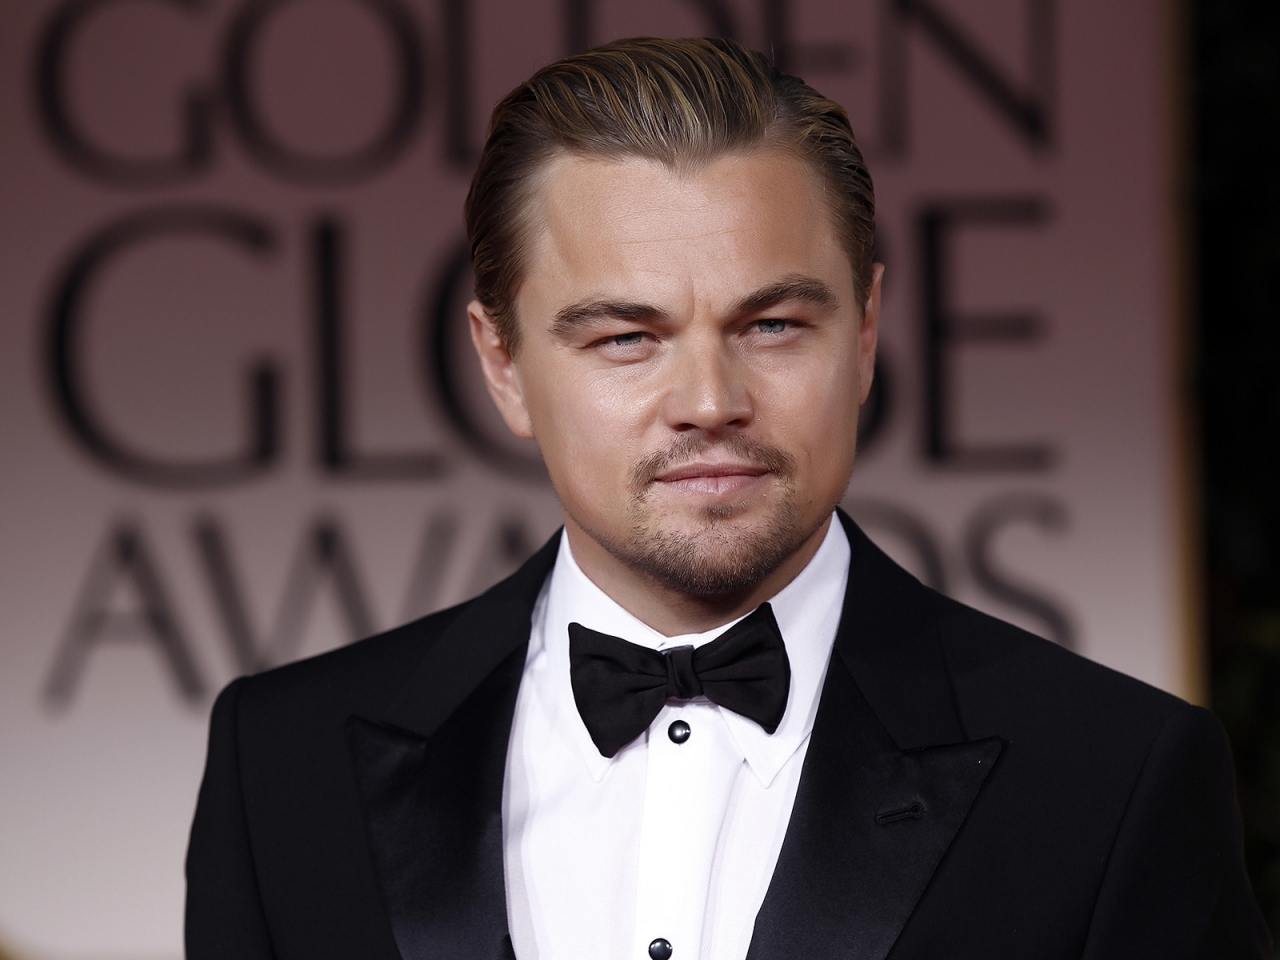 Leonardo DiCaprio in Tuxedo for 1280 x 960 resolution